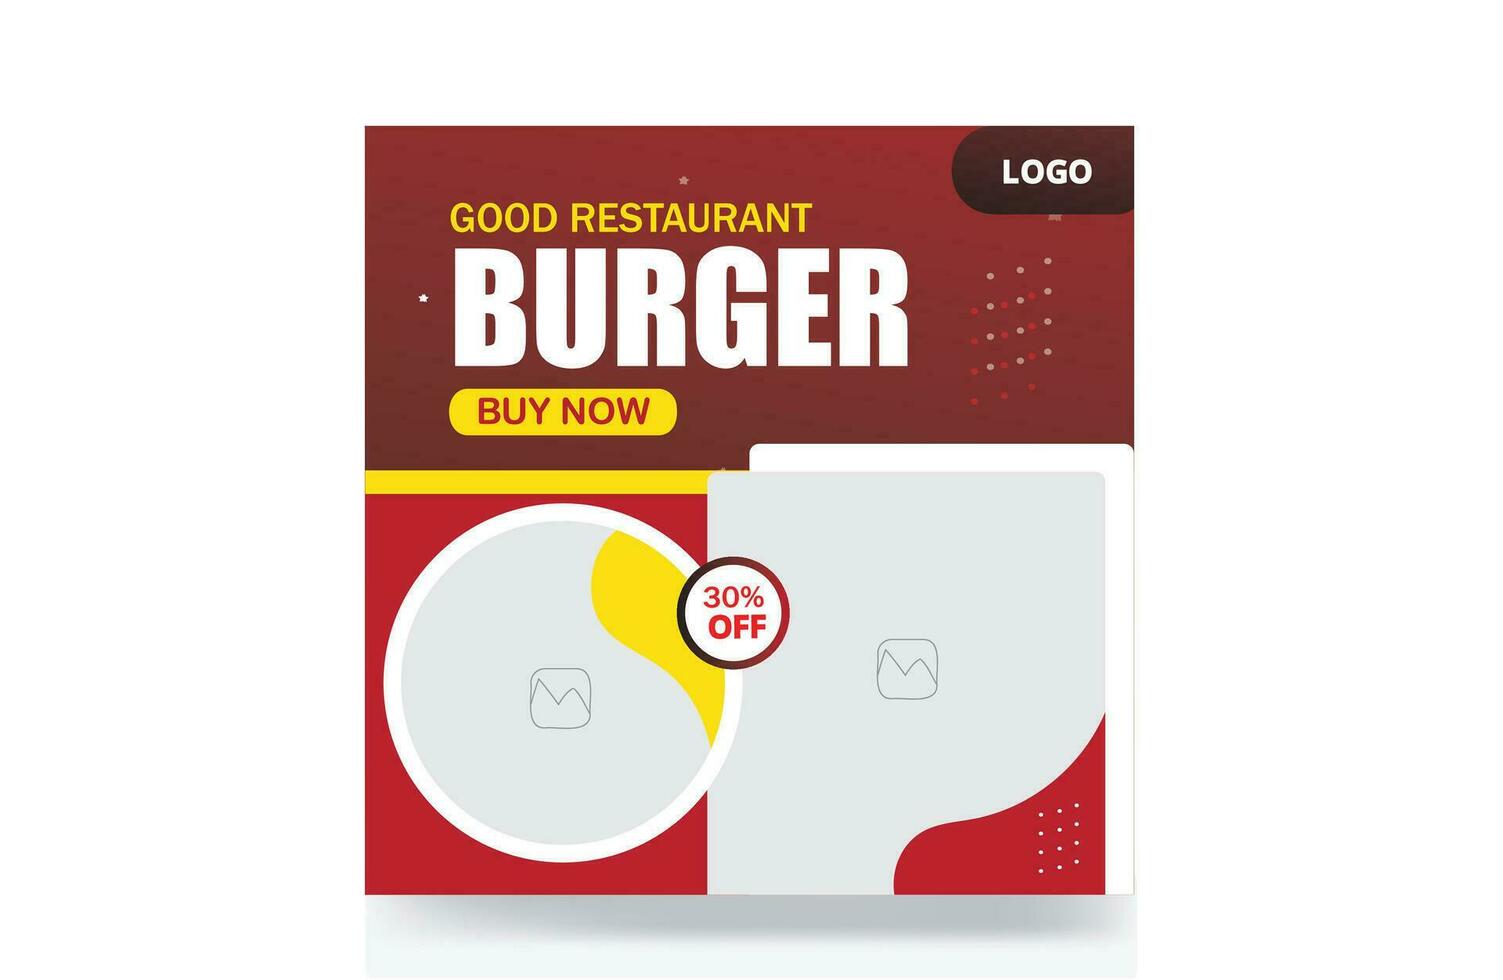 restaurant korting voedsel menu hamburger pizza sociaal media post banier sjabloon vector